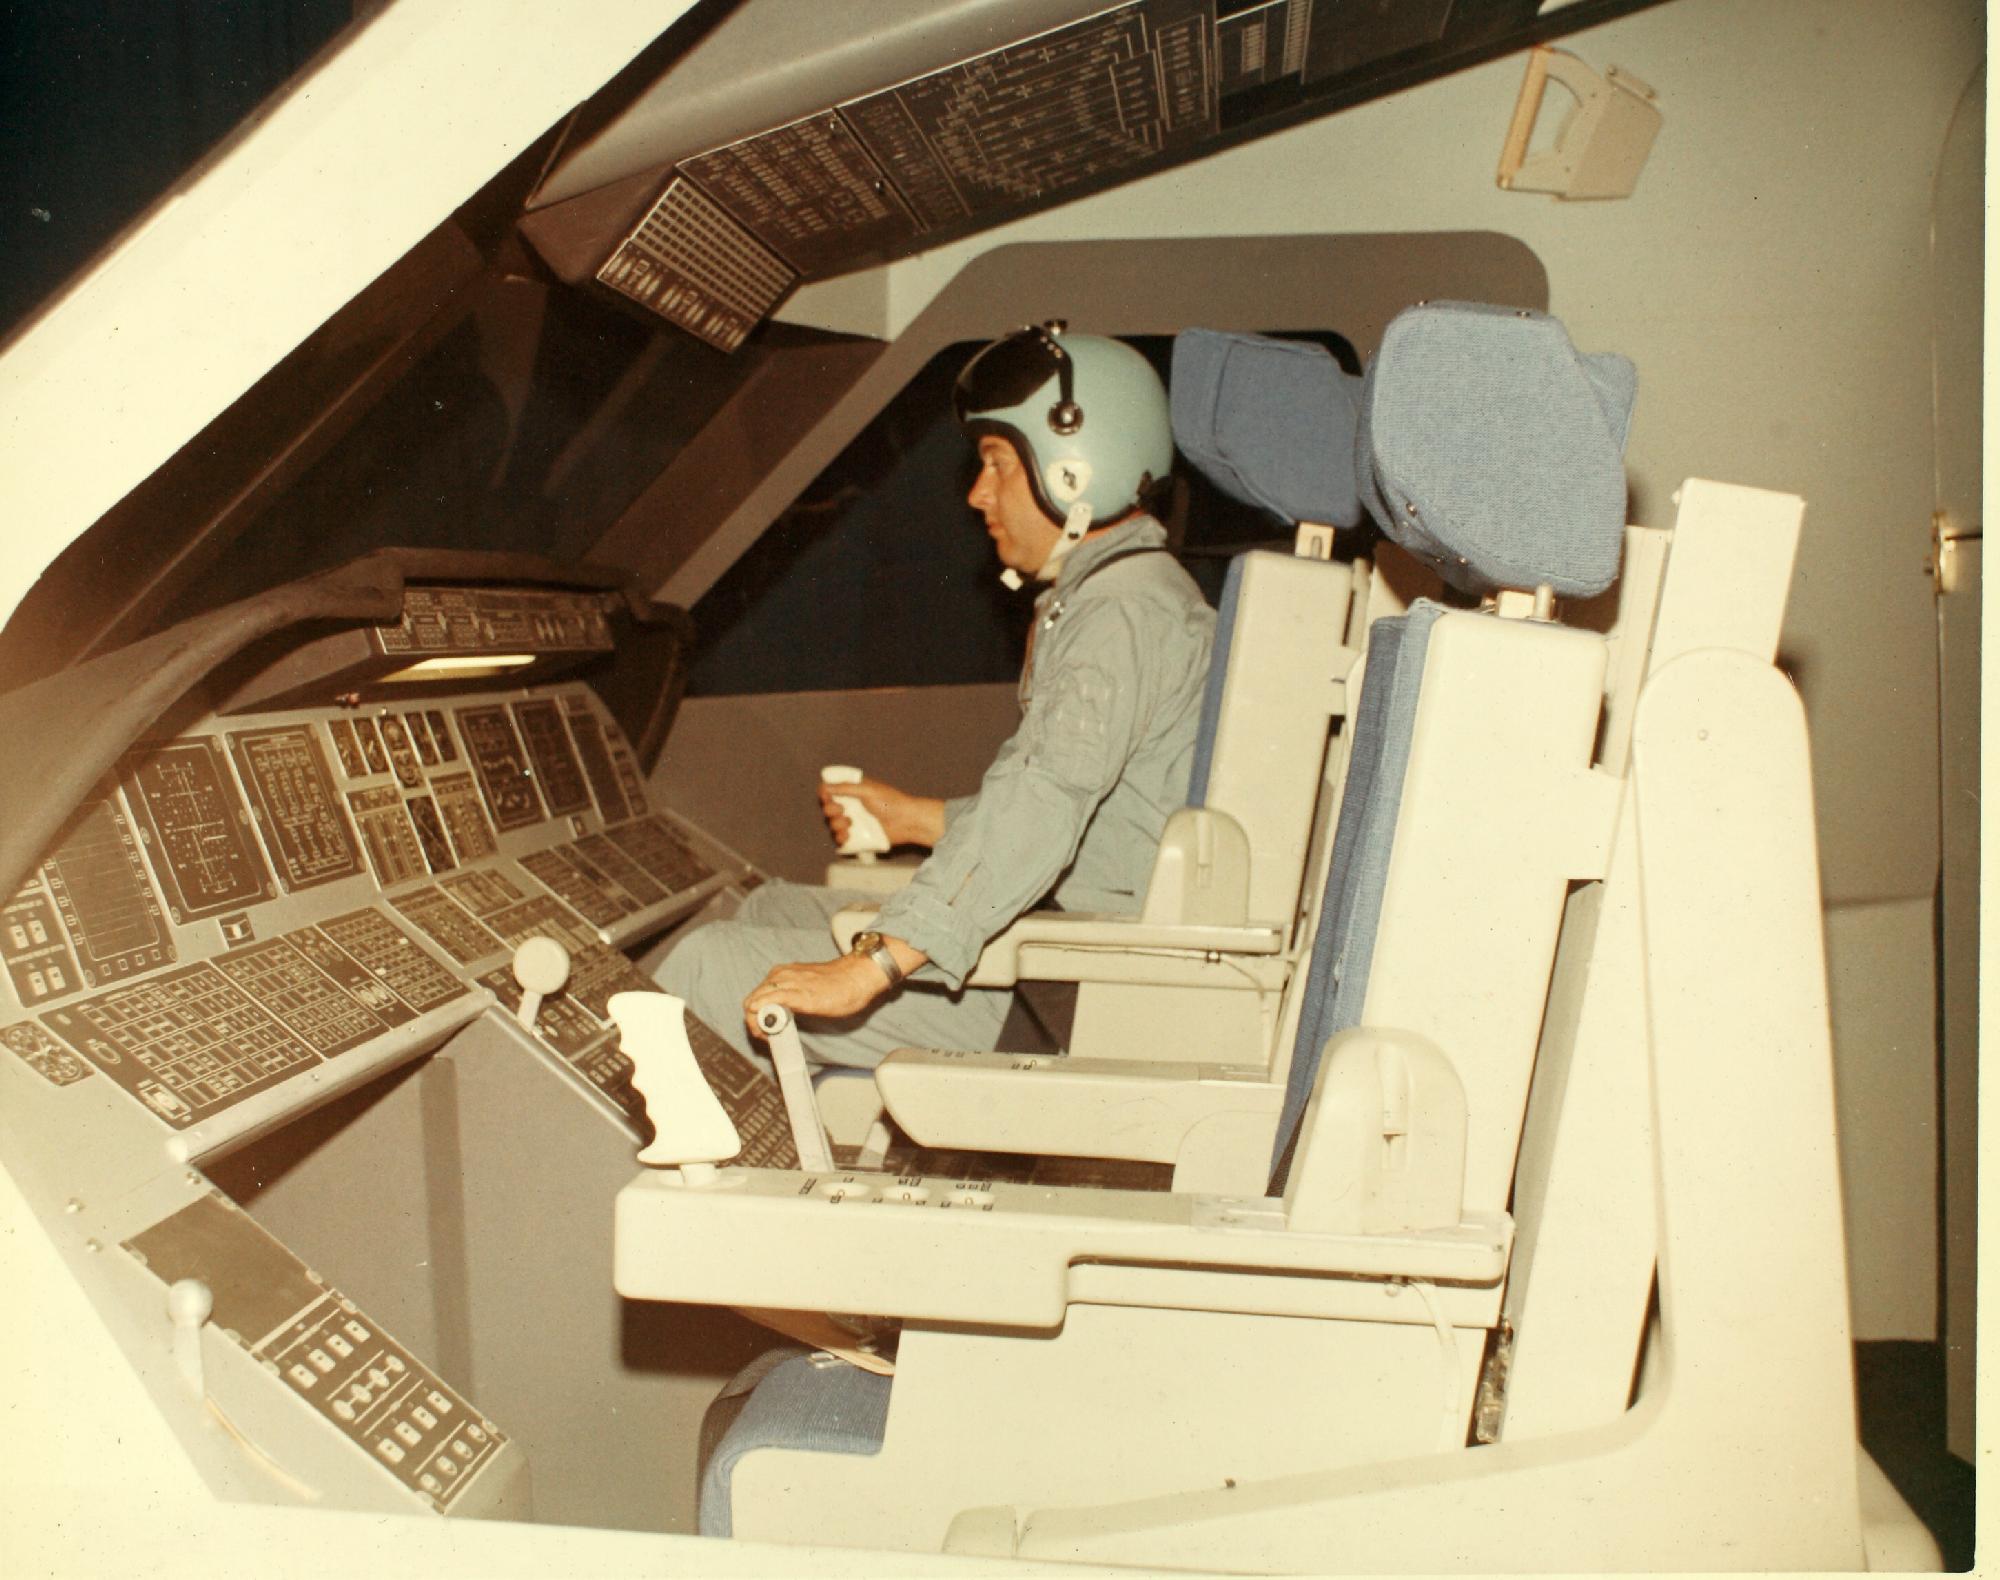 Space Shuttle consoles 1980s